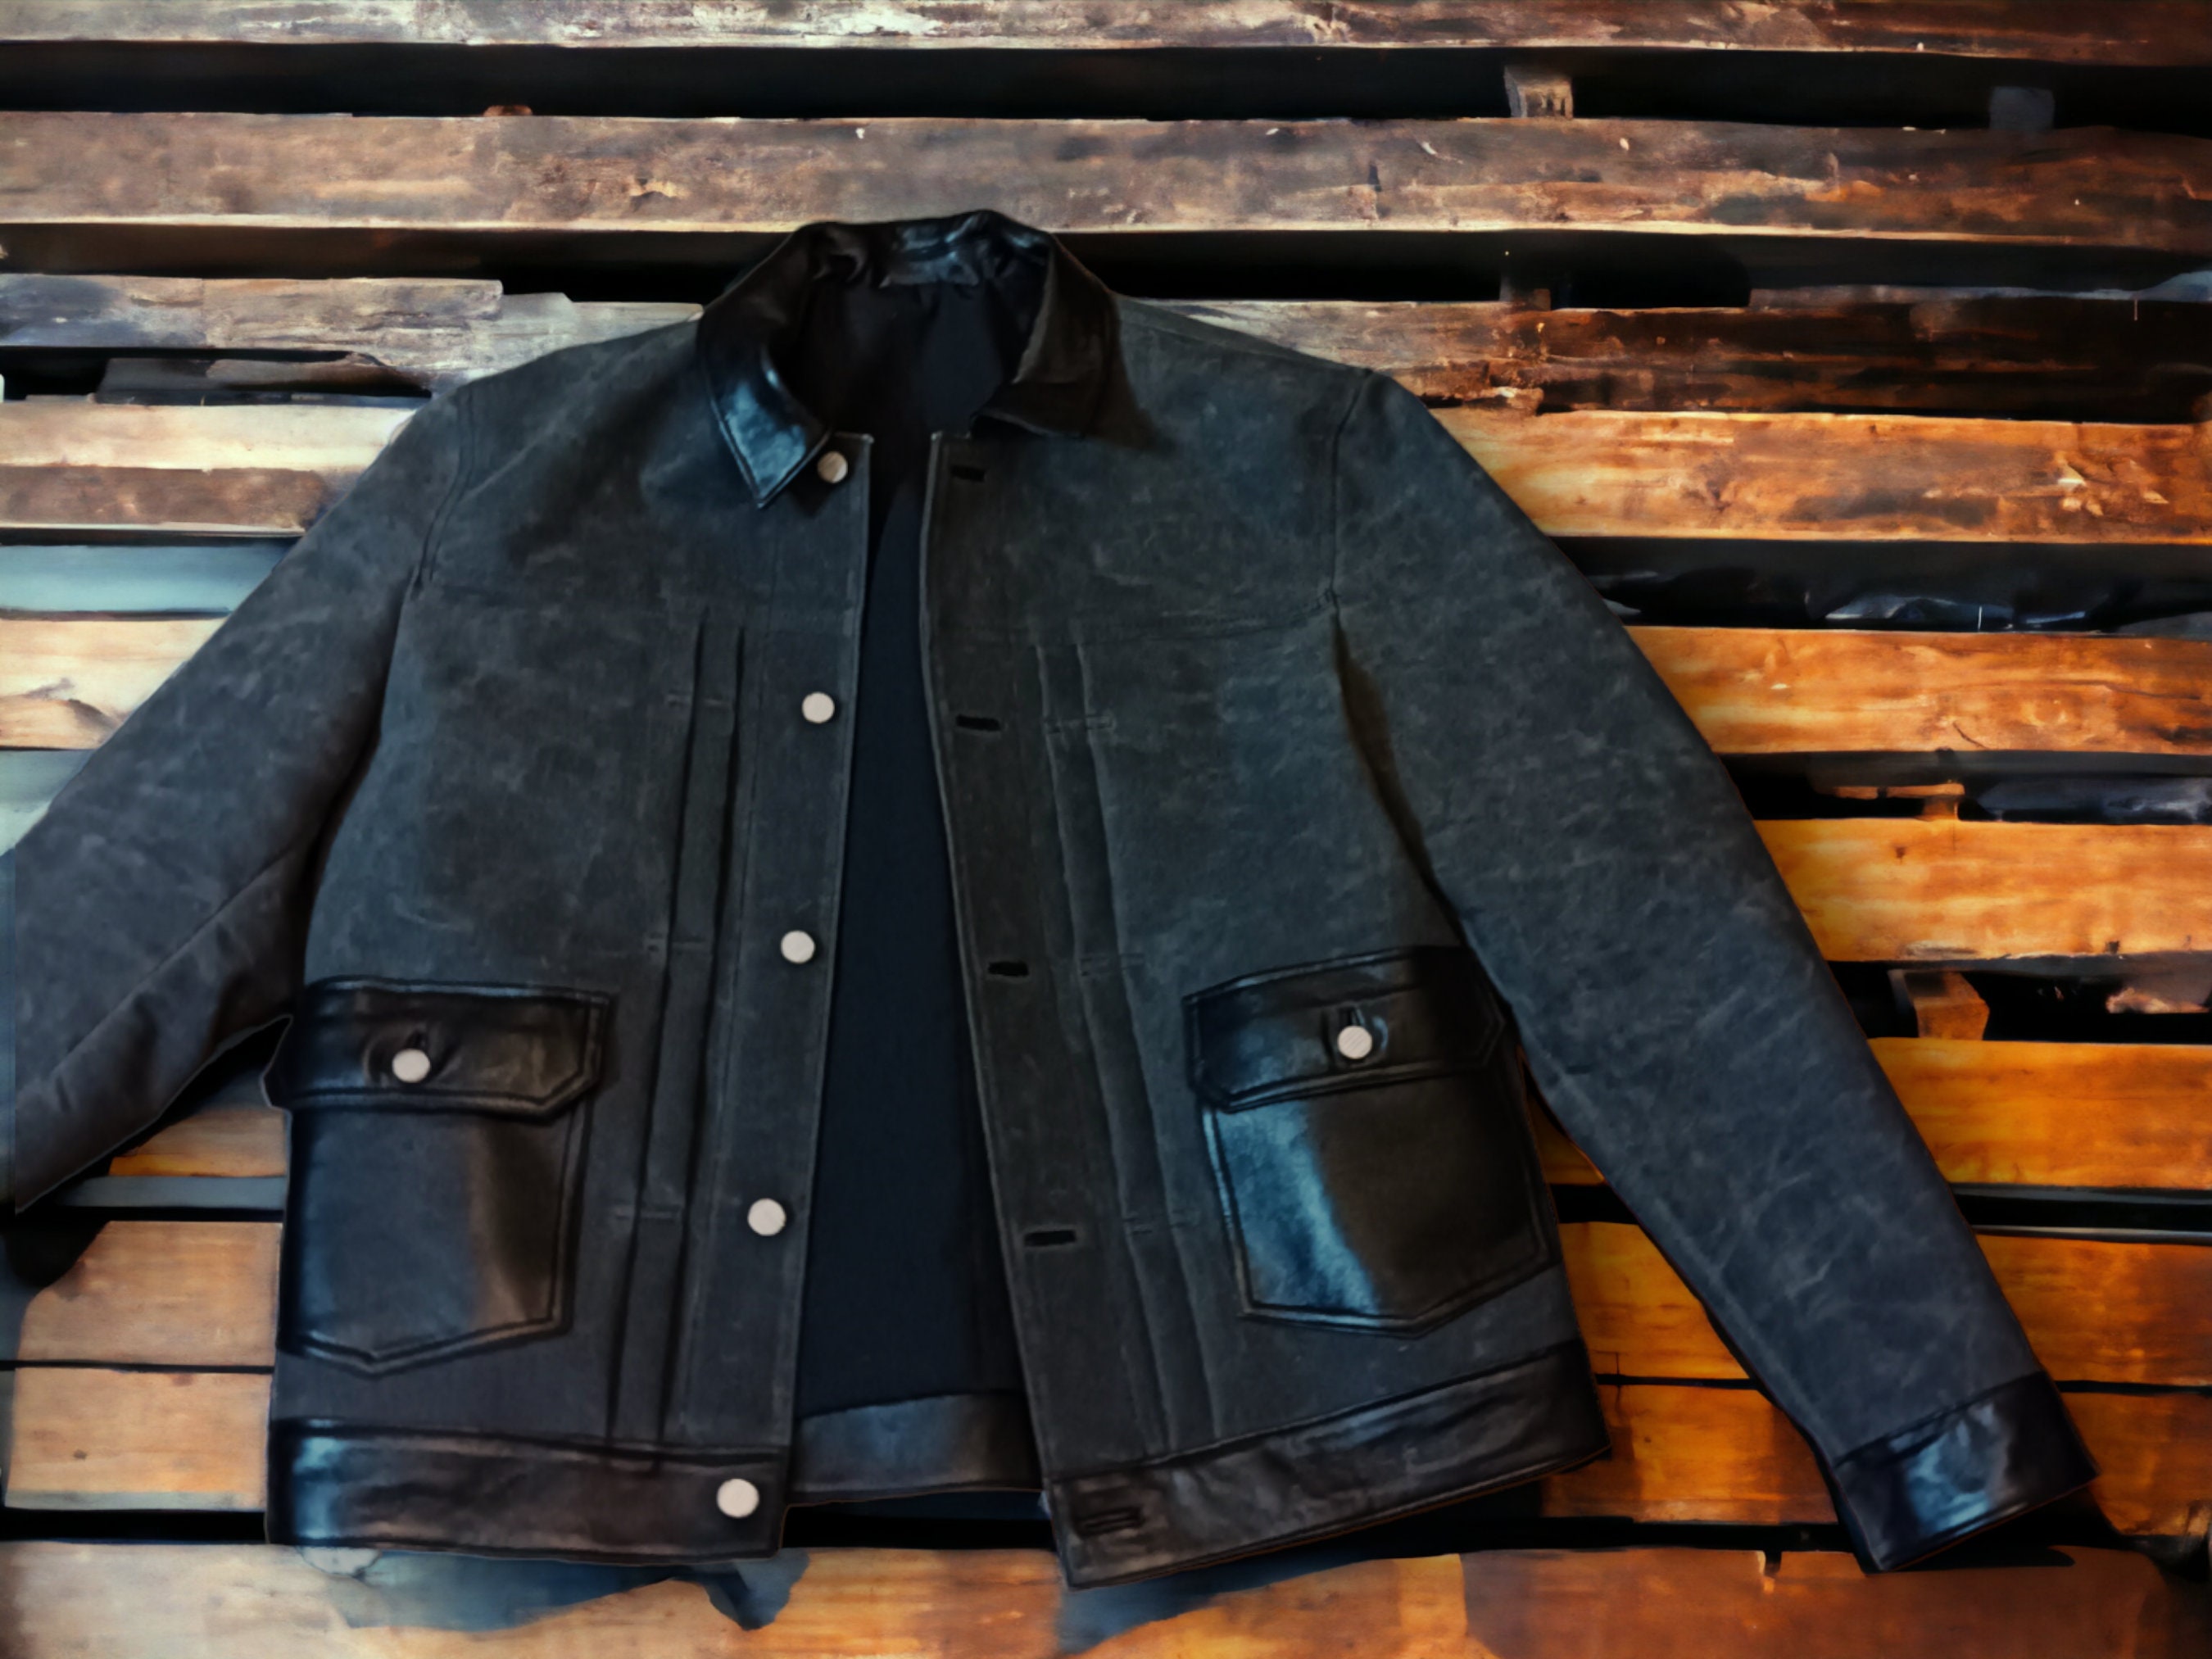 99percenthandmade Men's Slim Fit Biker Jacket